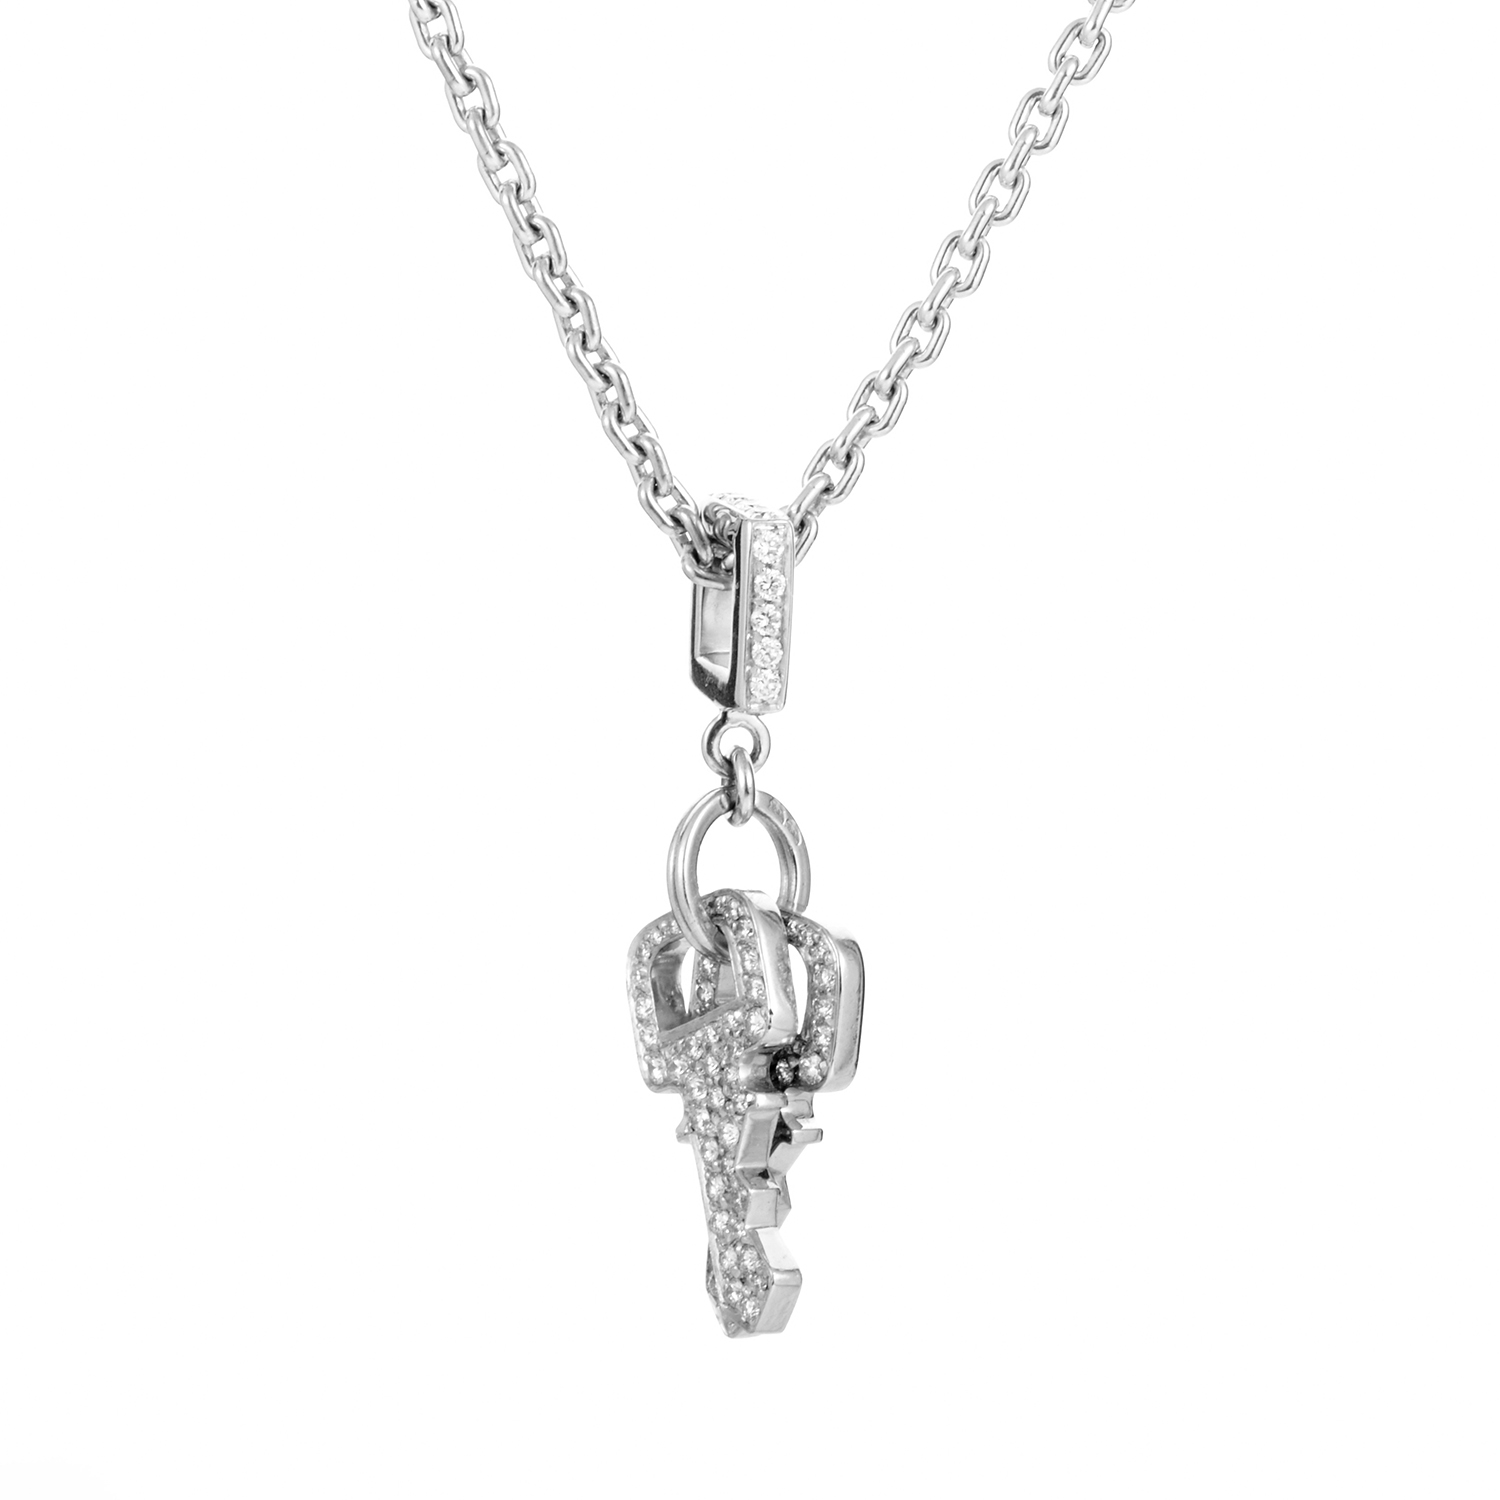 Louis Vuitton Charms & Chains 18K White Gold Diamond Keys Necklace | eBay